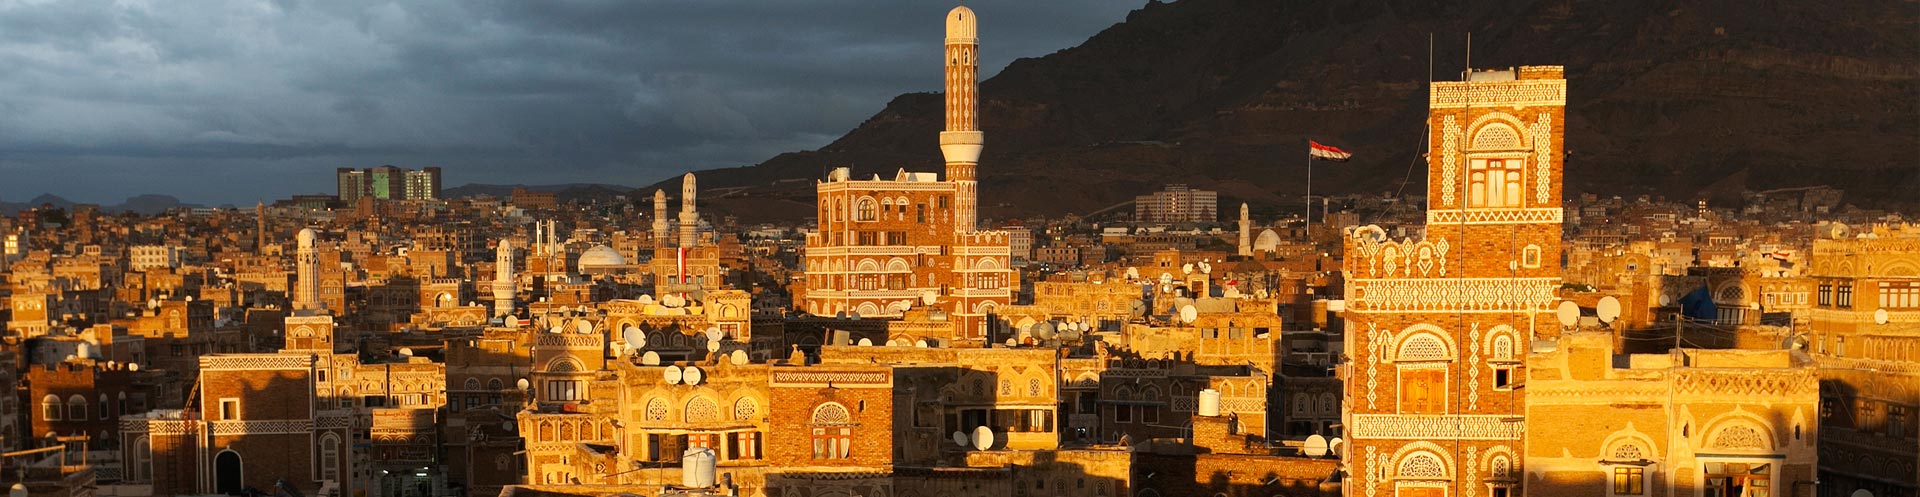 arabian cityscape